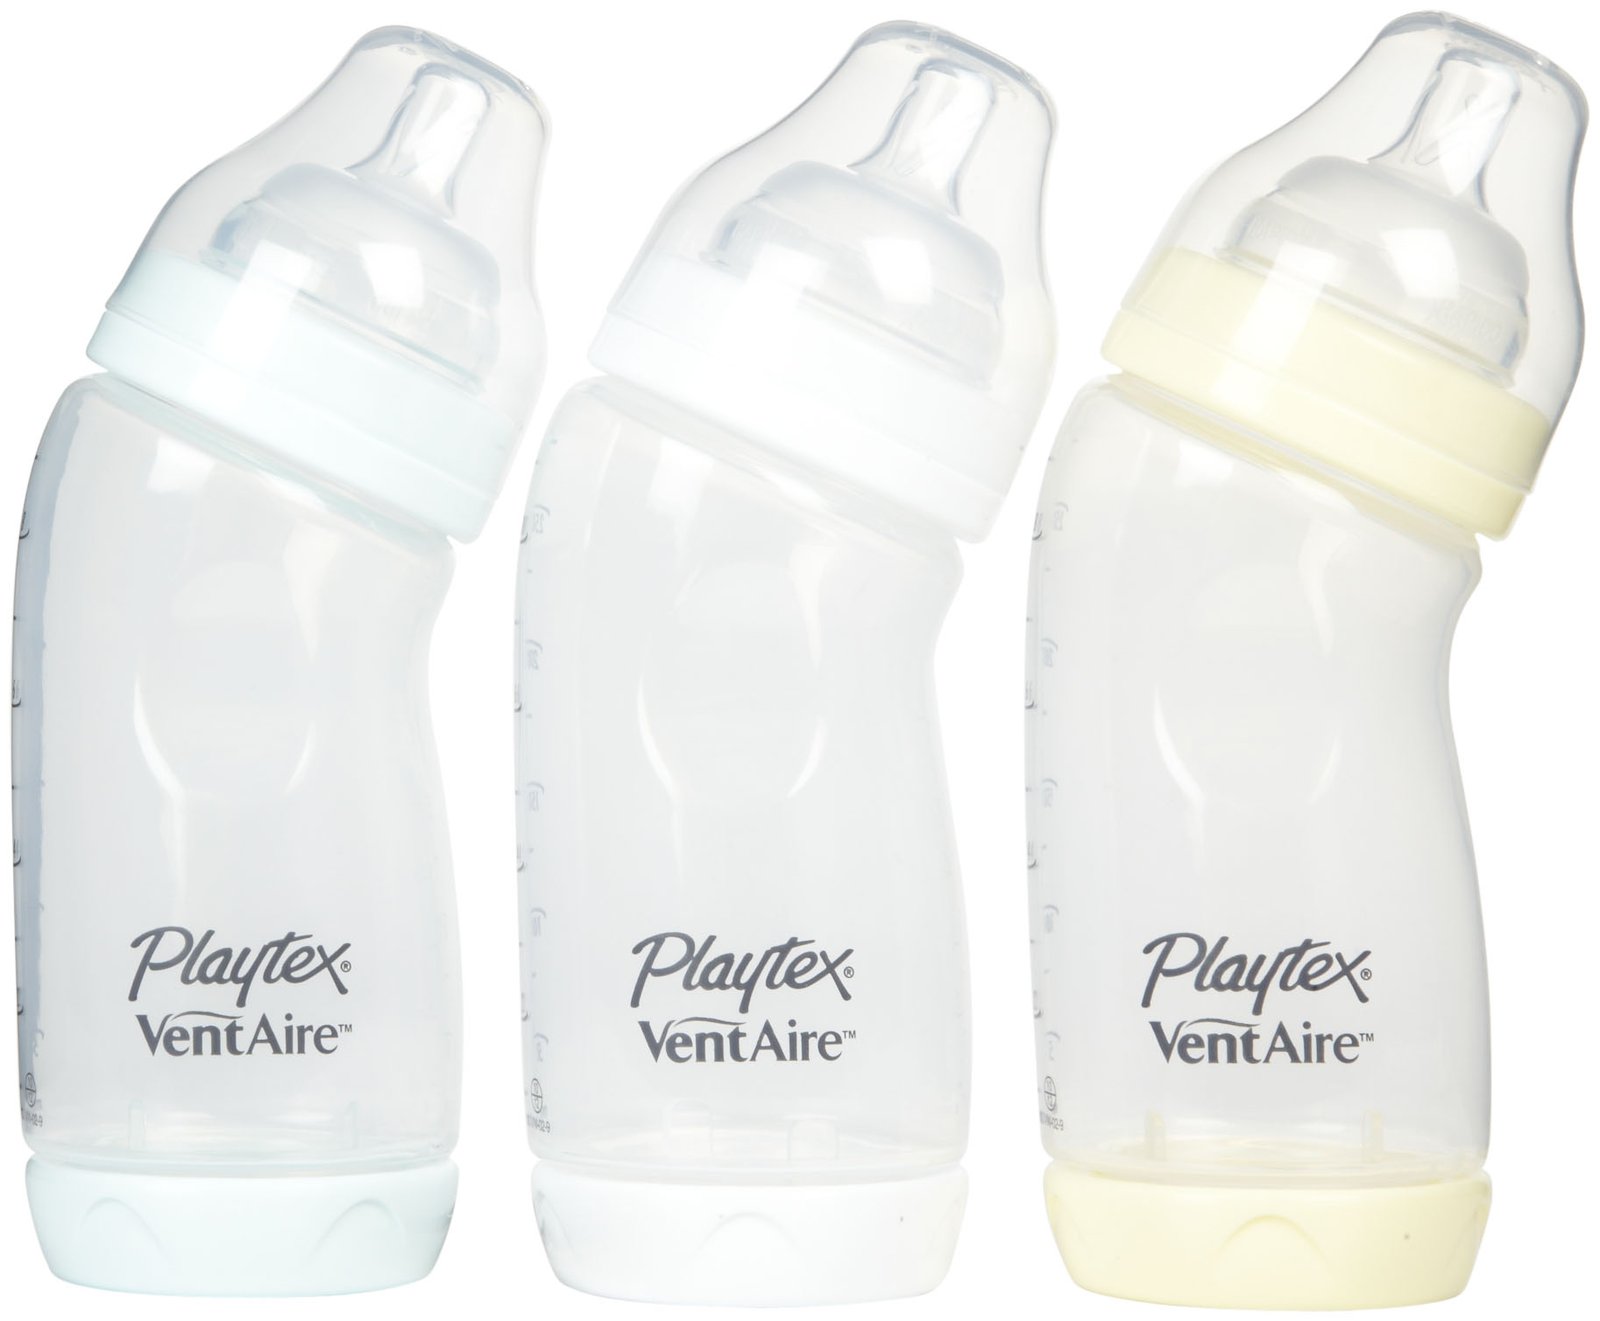 playtex ventaire 9 oz bottles